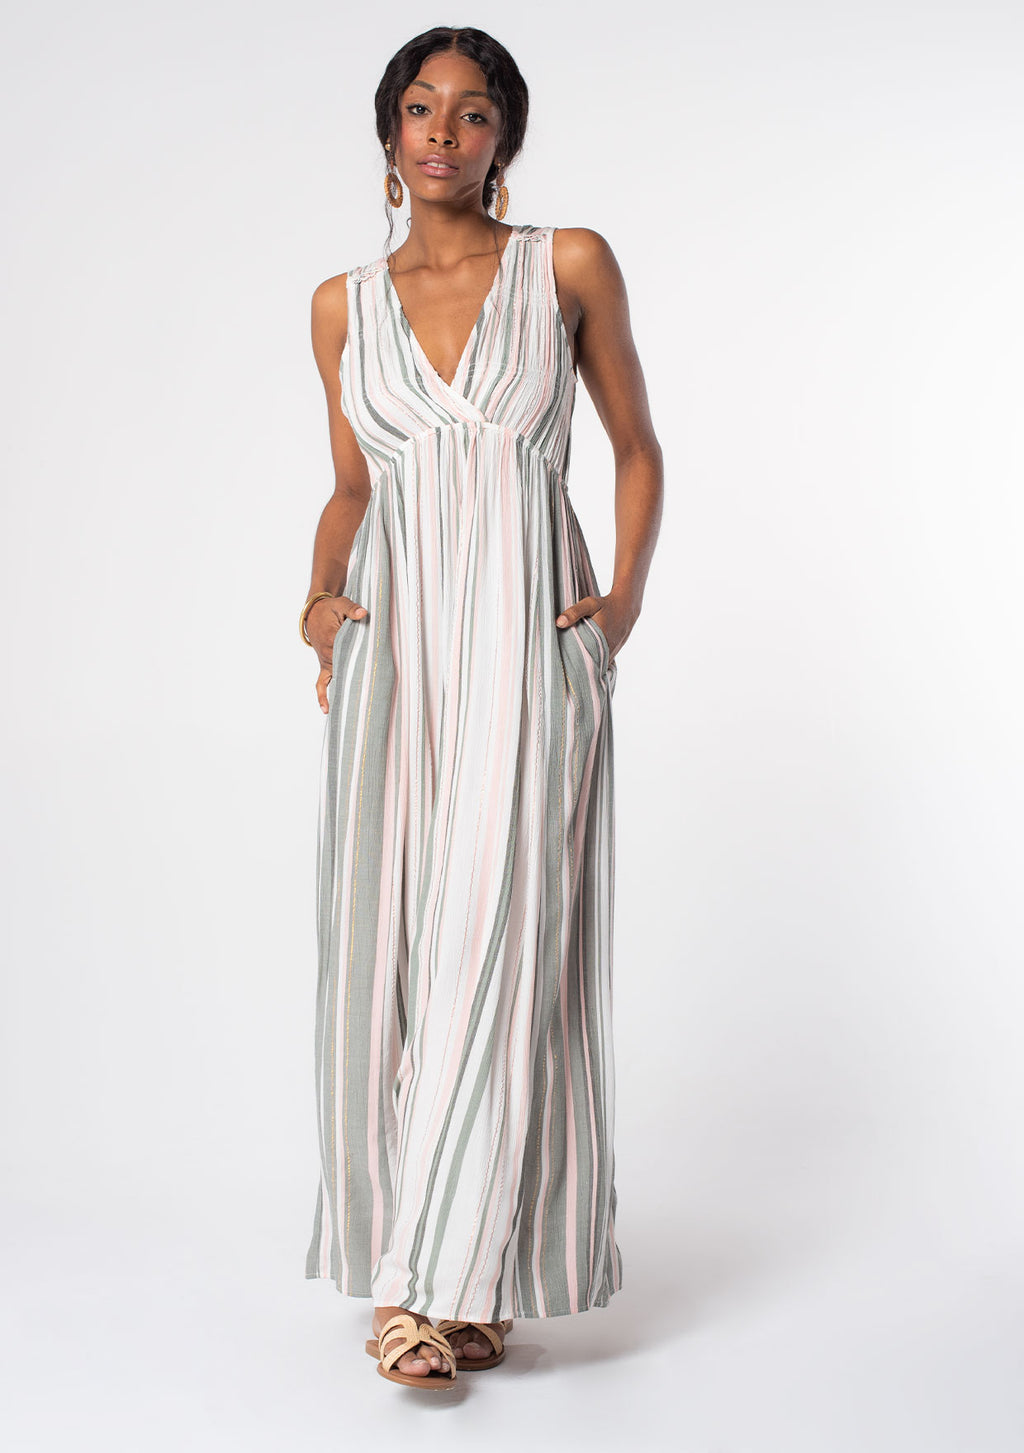 Blue and White Stripe Gown | Maxi dress, Fashion dresses, Skirt fashion